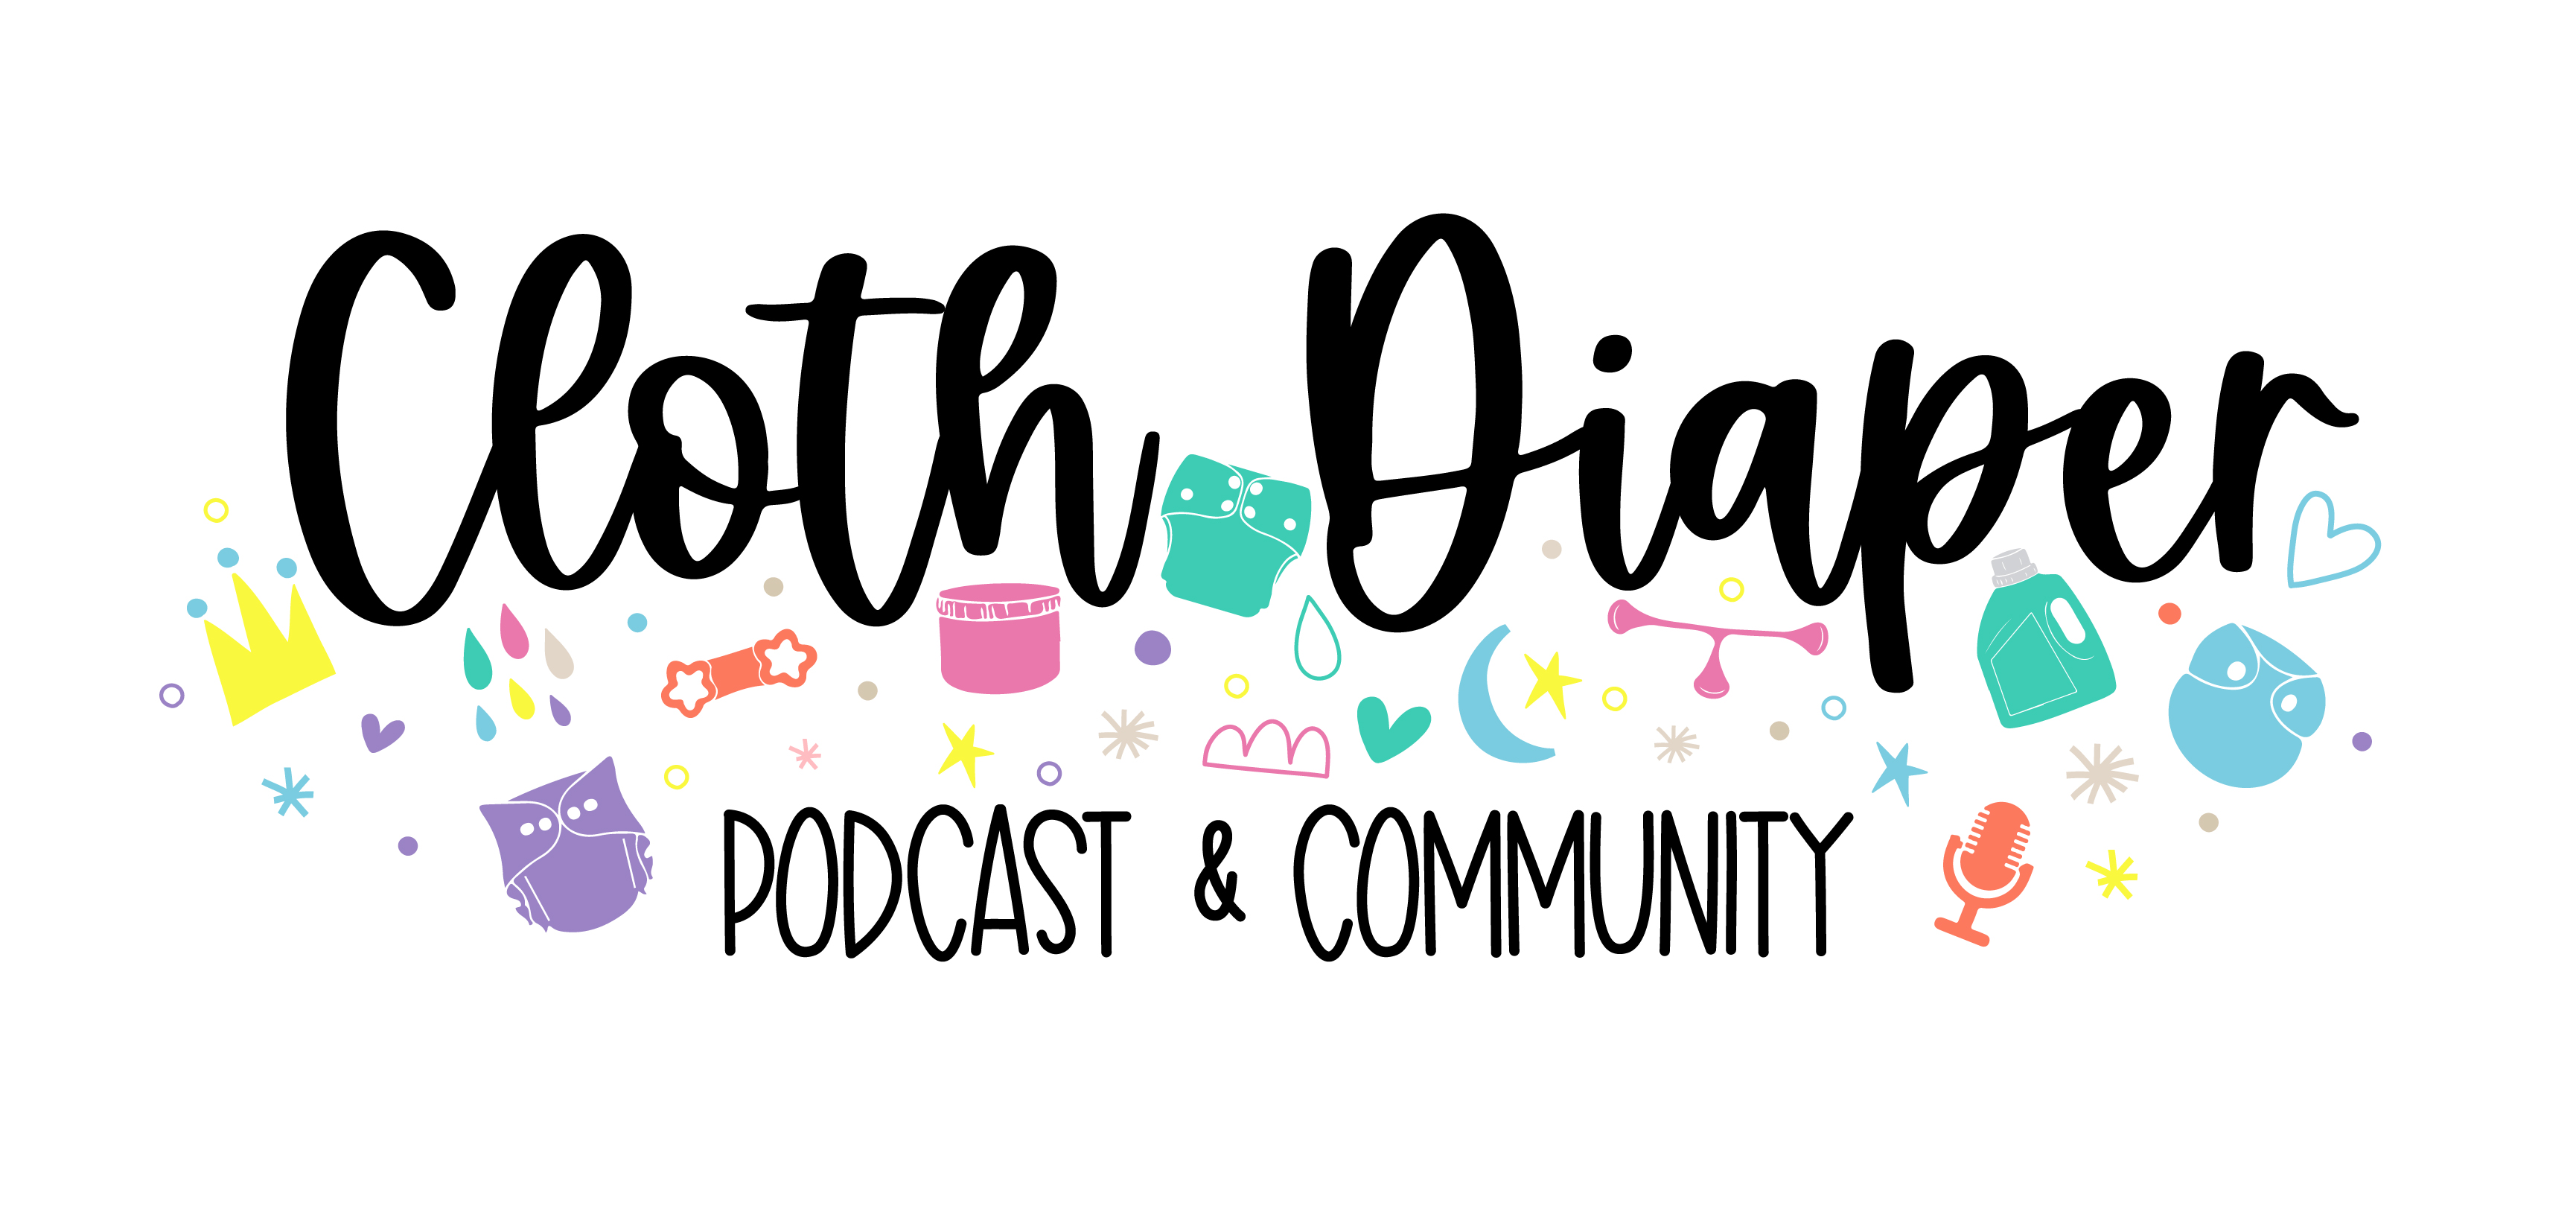 Cloth Diaper Podcast